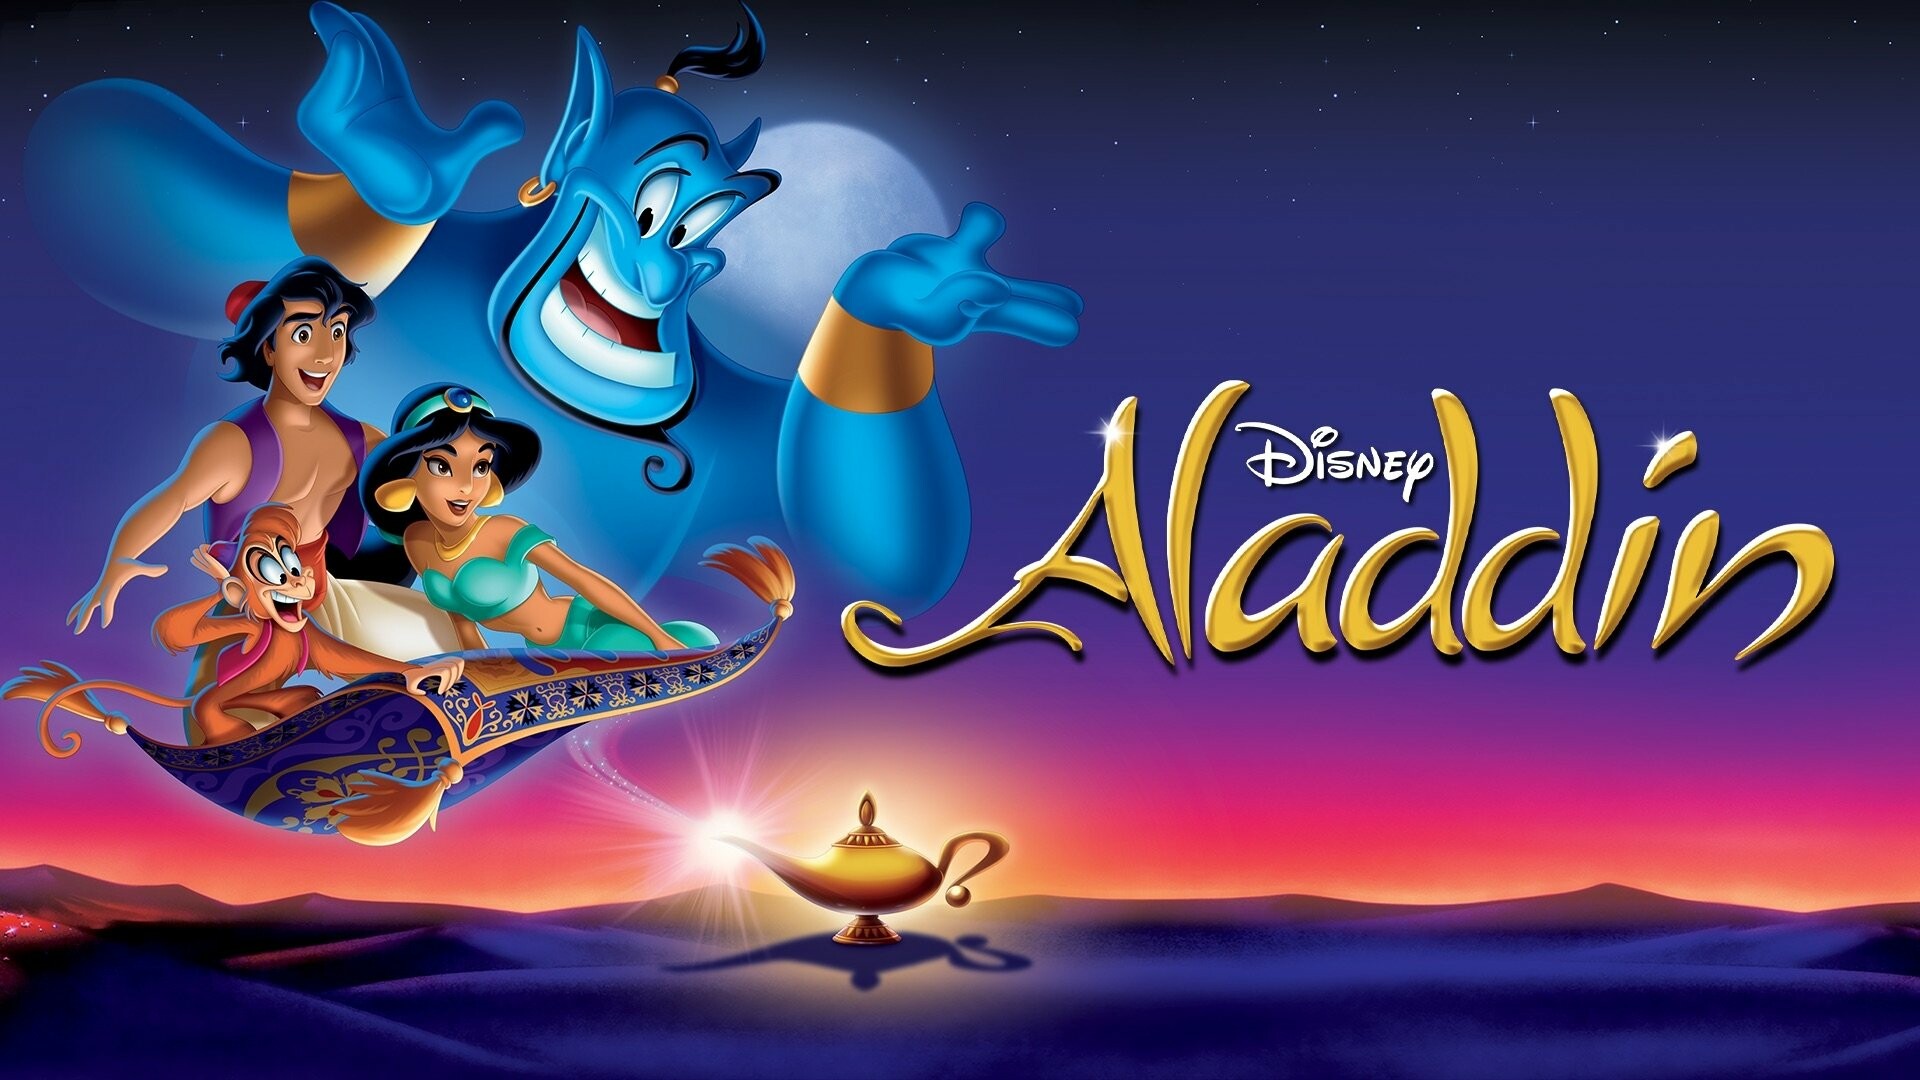 Aladdin (Cartoon): Disney's 1992 animation hit, Poster. 1920x1080 Full HD Wallpaper.